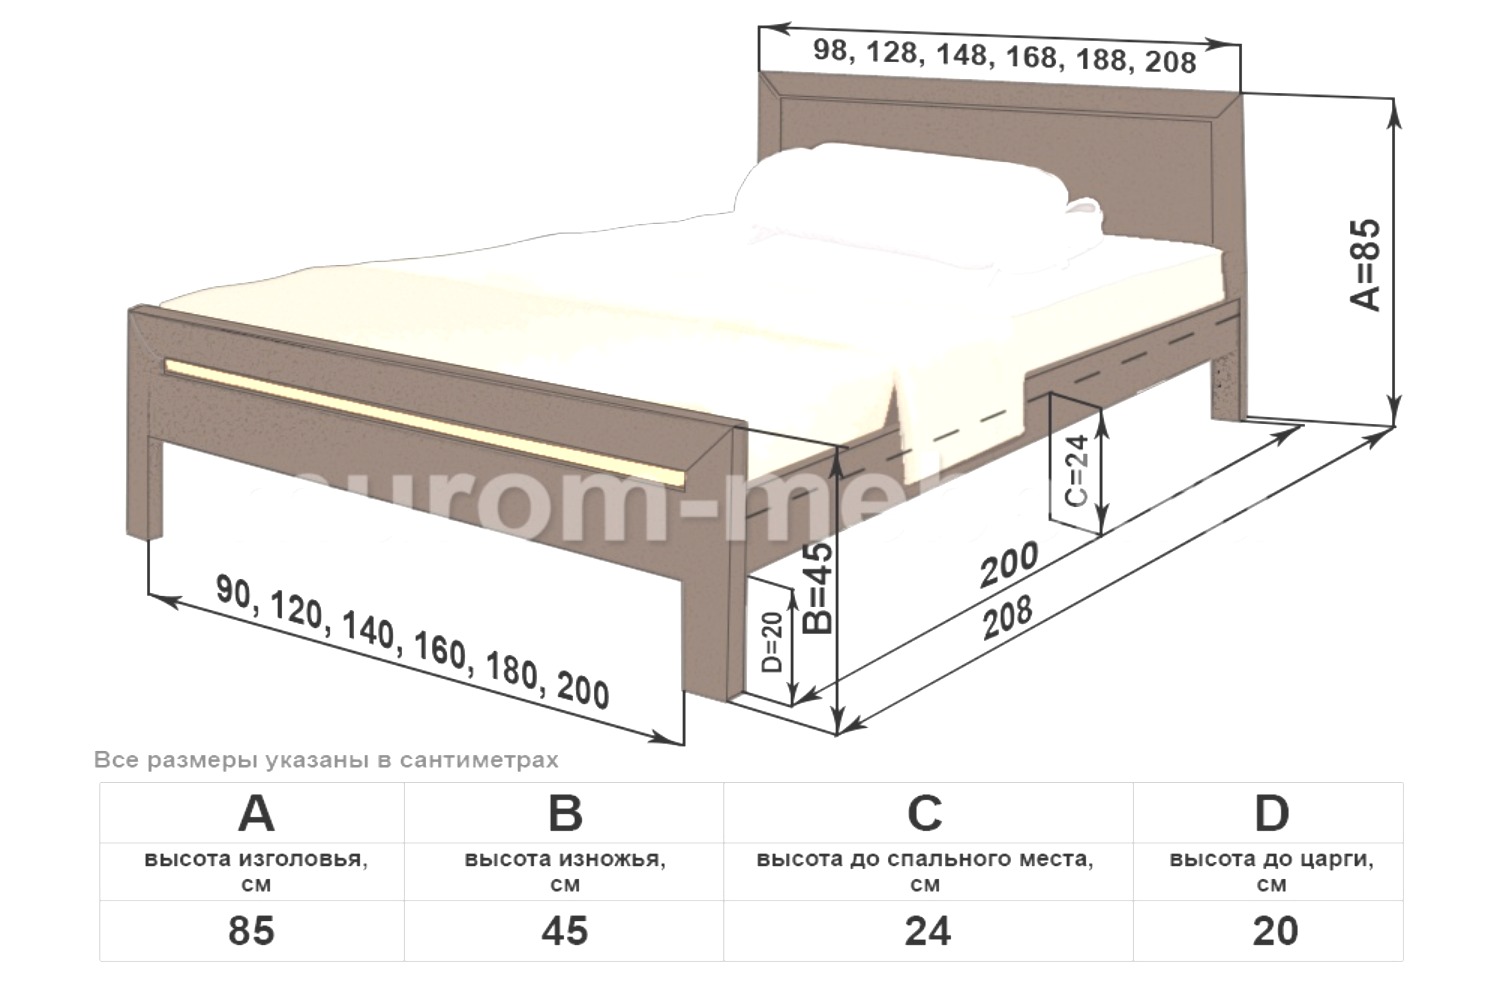 стандартная высота кровати до матраса